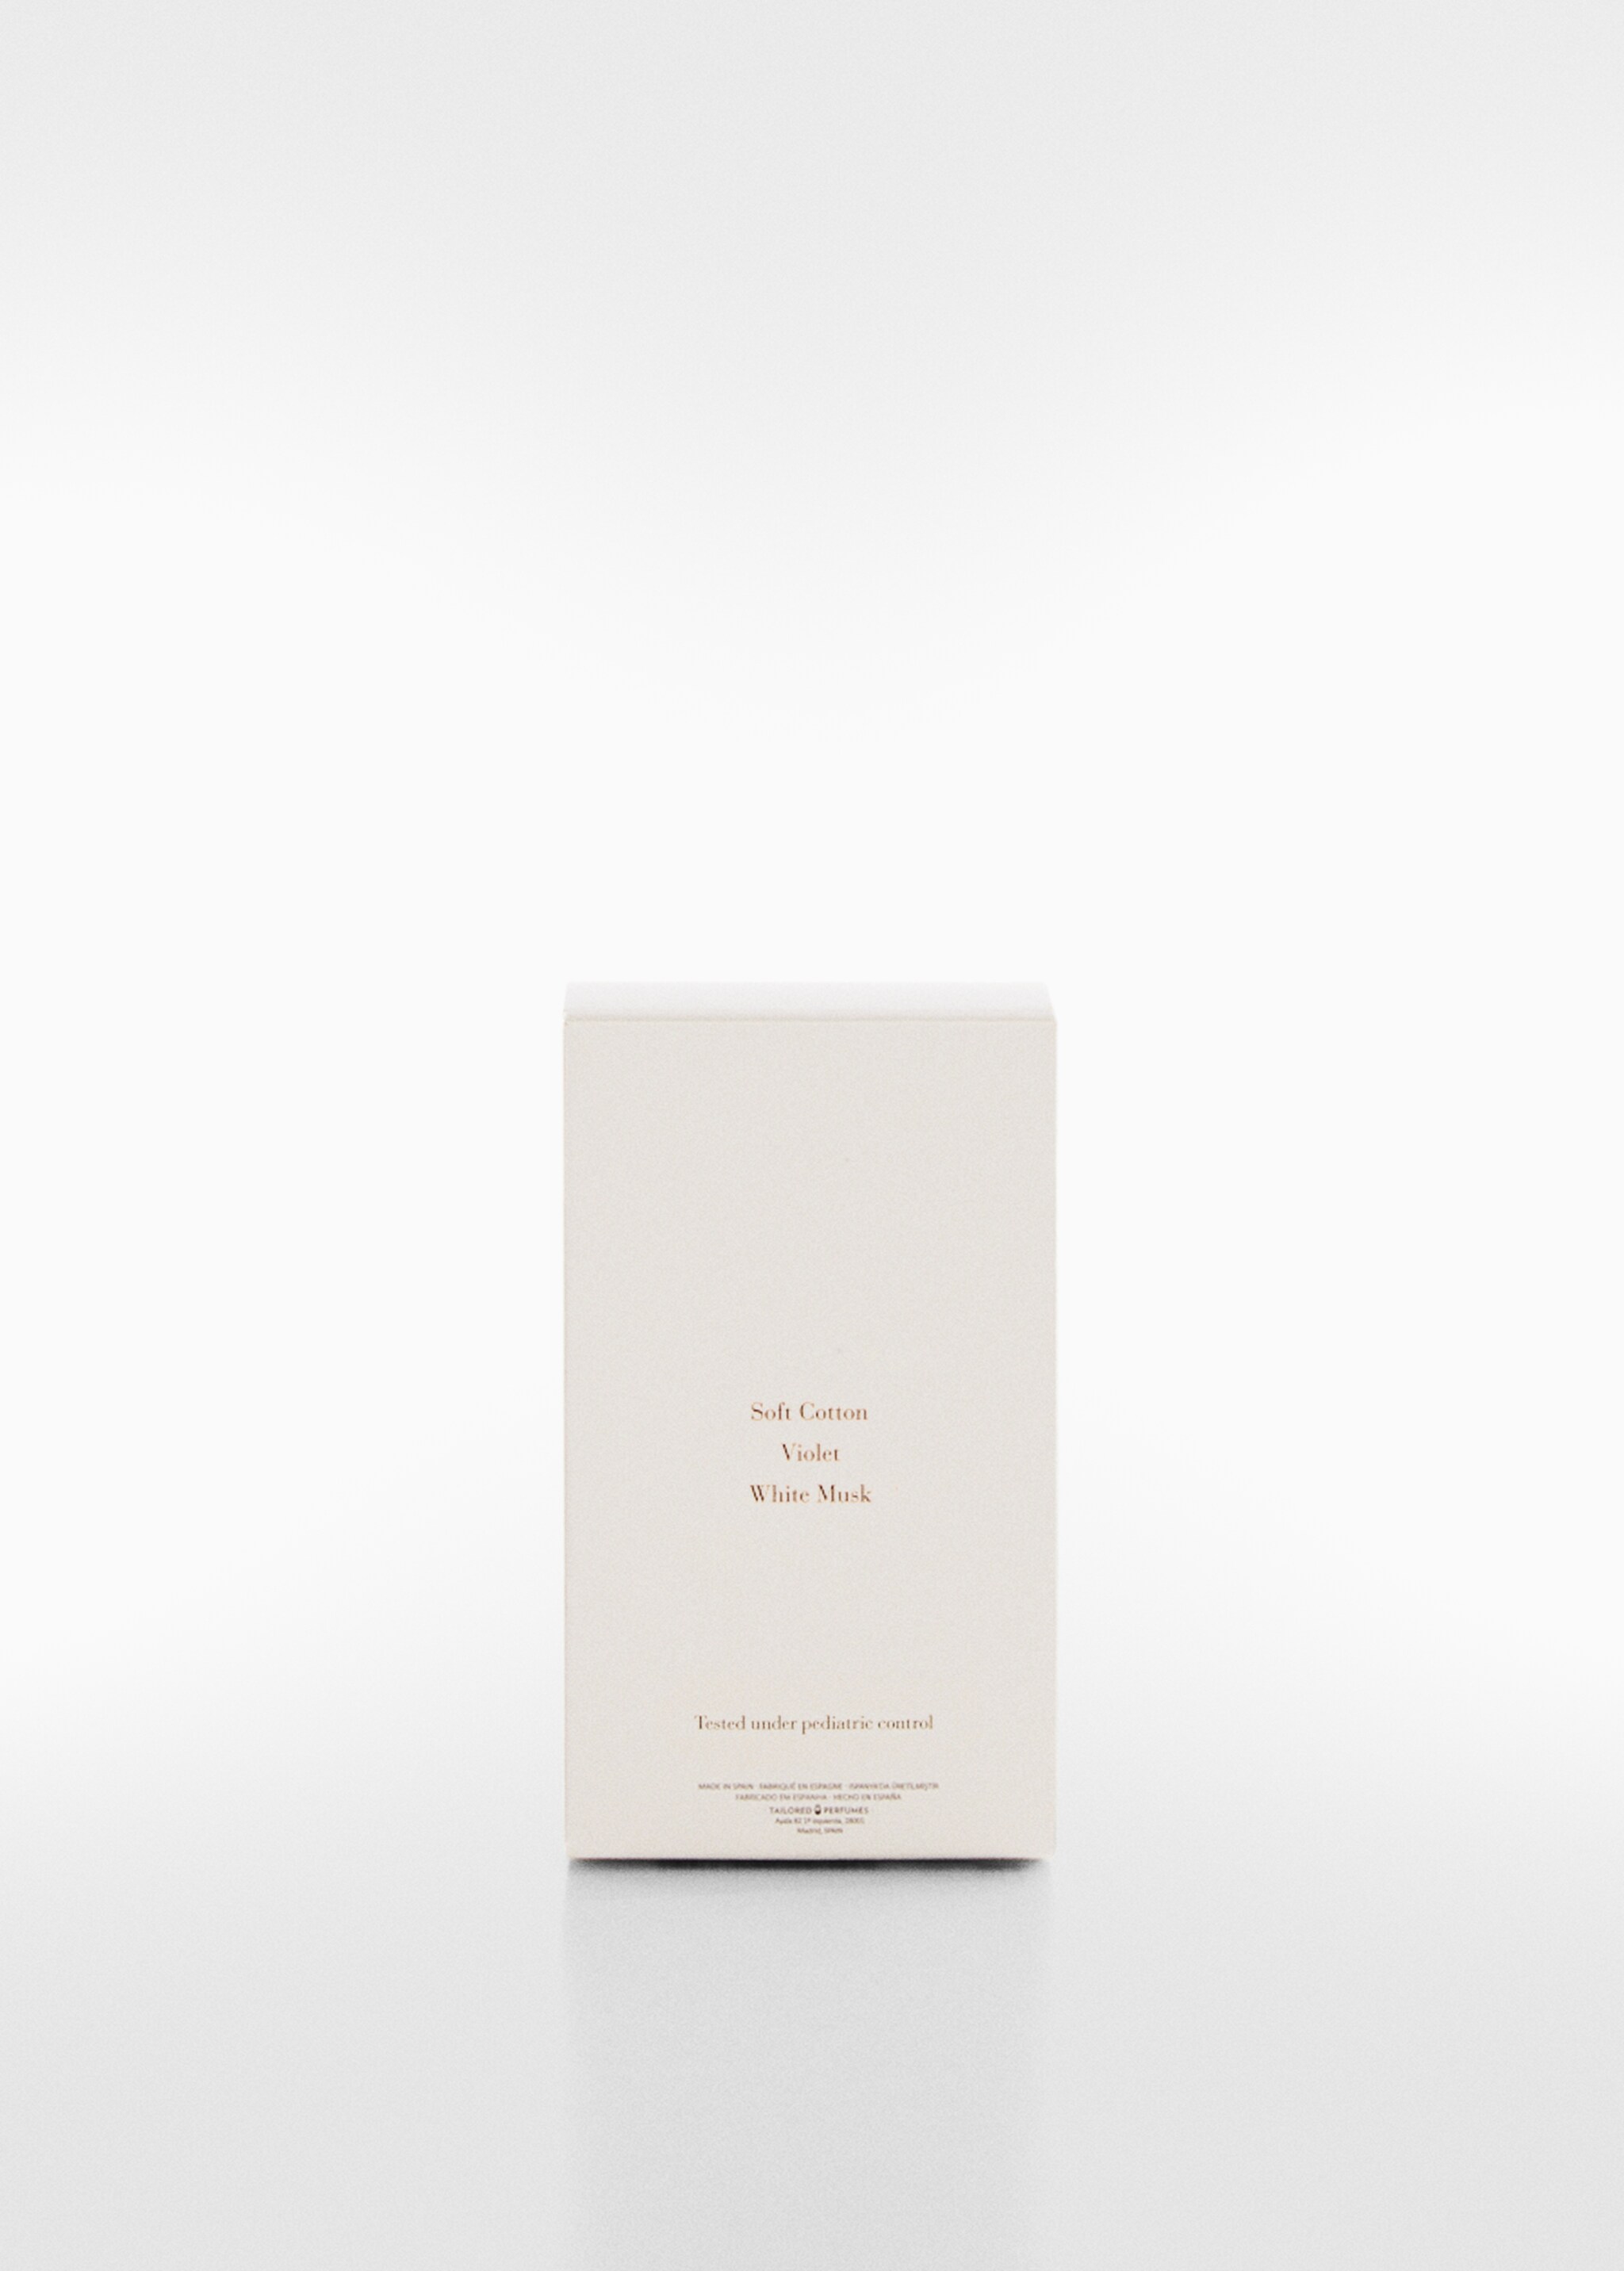 Eau Tendre fragrance 50ml - Medium plane